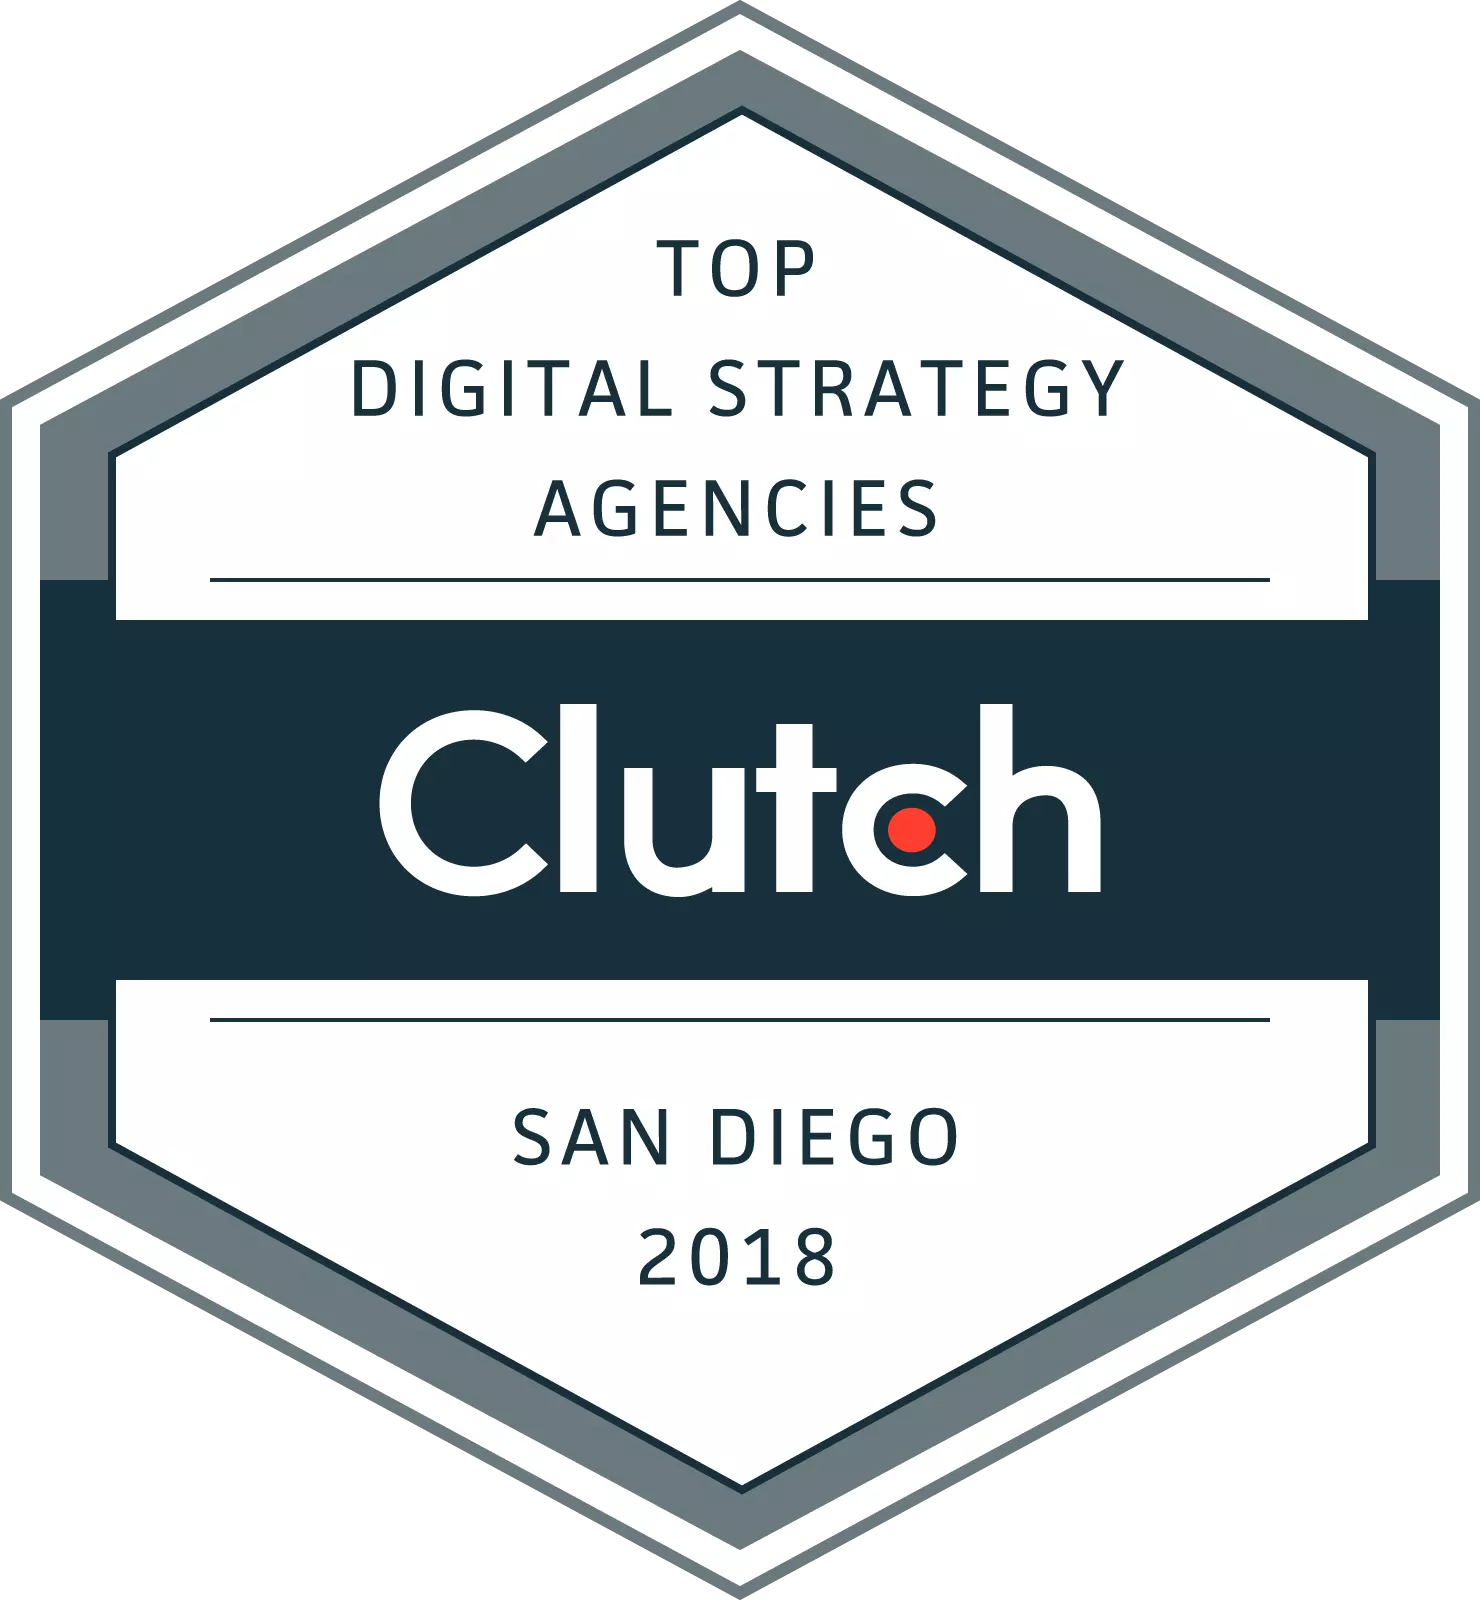 Named #11 in Top 20 San Diego Digital Strategy Agencies
Named One of the Top 20 (#11) Digital Strategy Agencies in San Diego by Clutch.co
etc